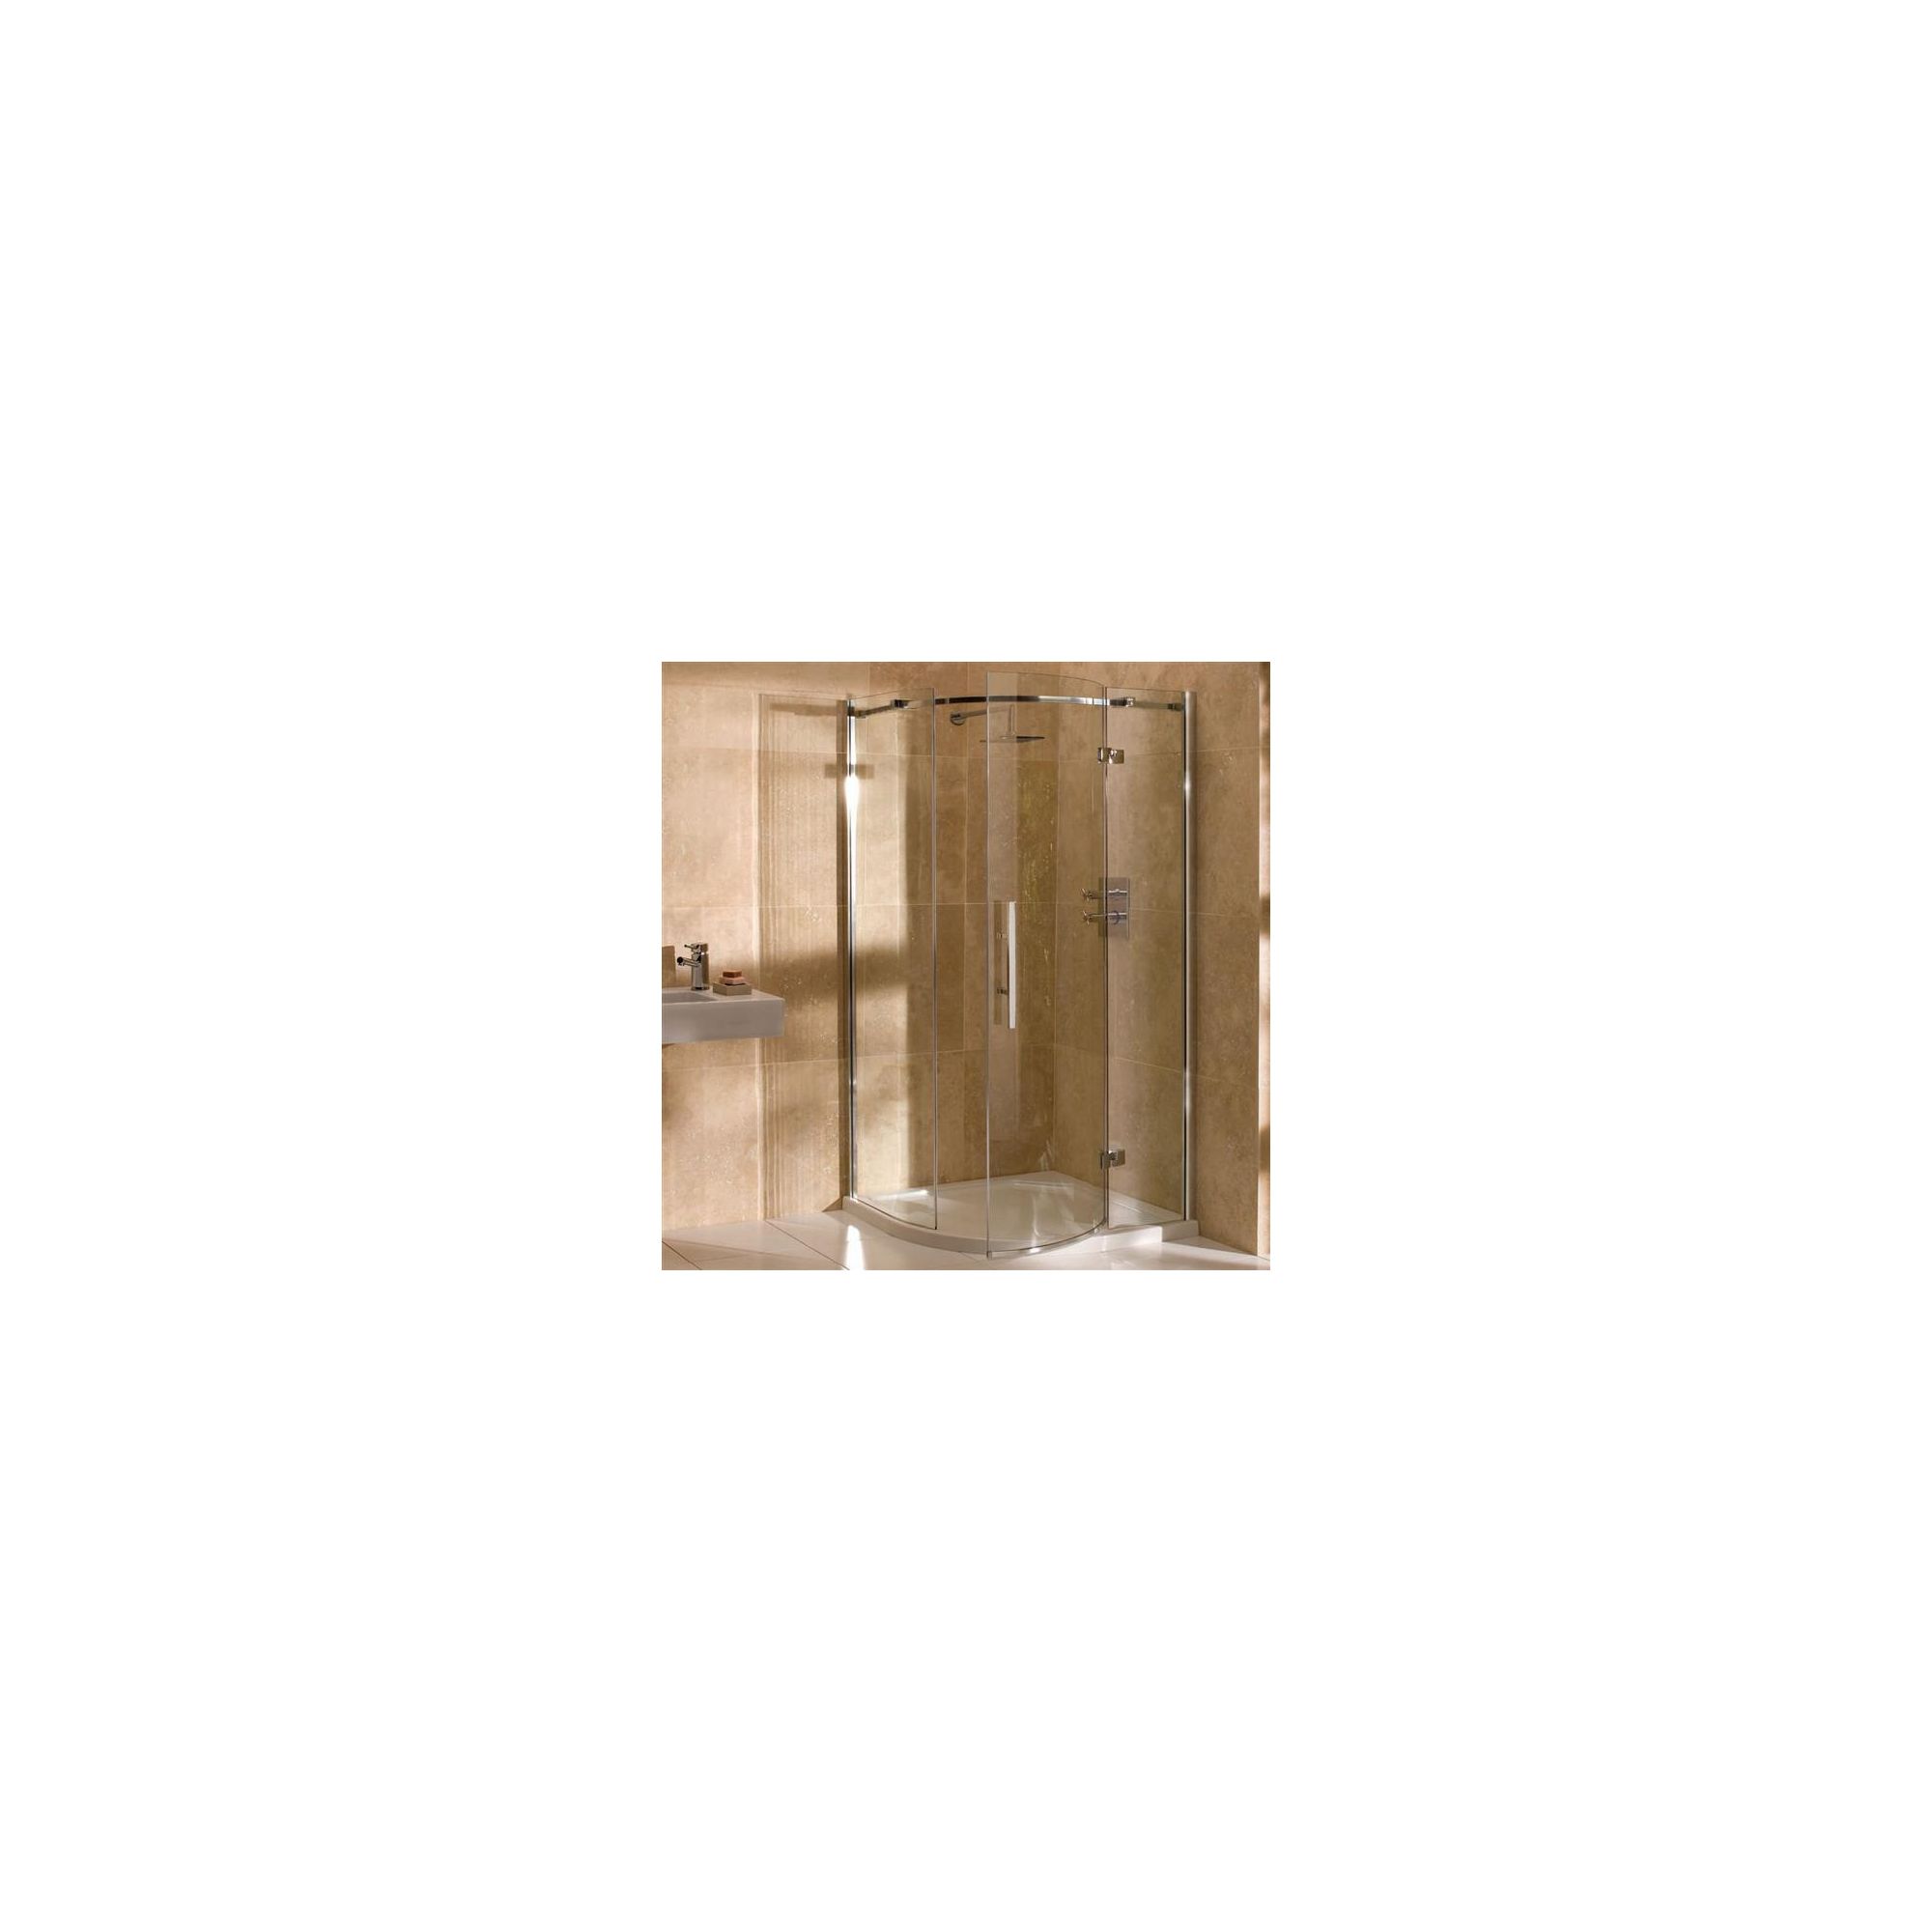 Merlyn Vivid Nine Quadrant Shower Door, 1000mm x 1000mm, Right Handed, 8mm Glass at Tesco Direct